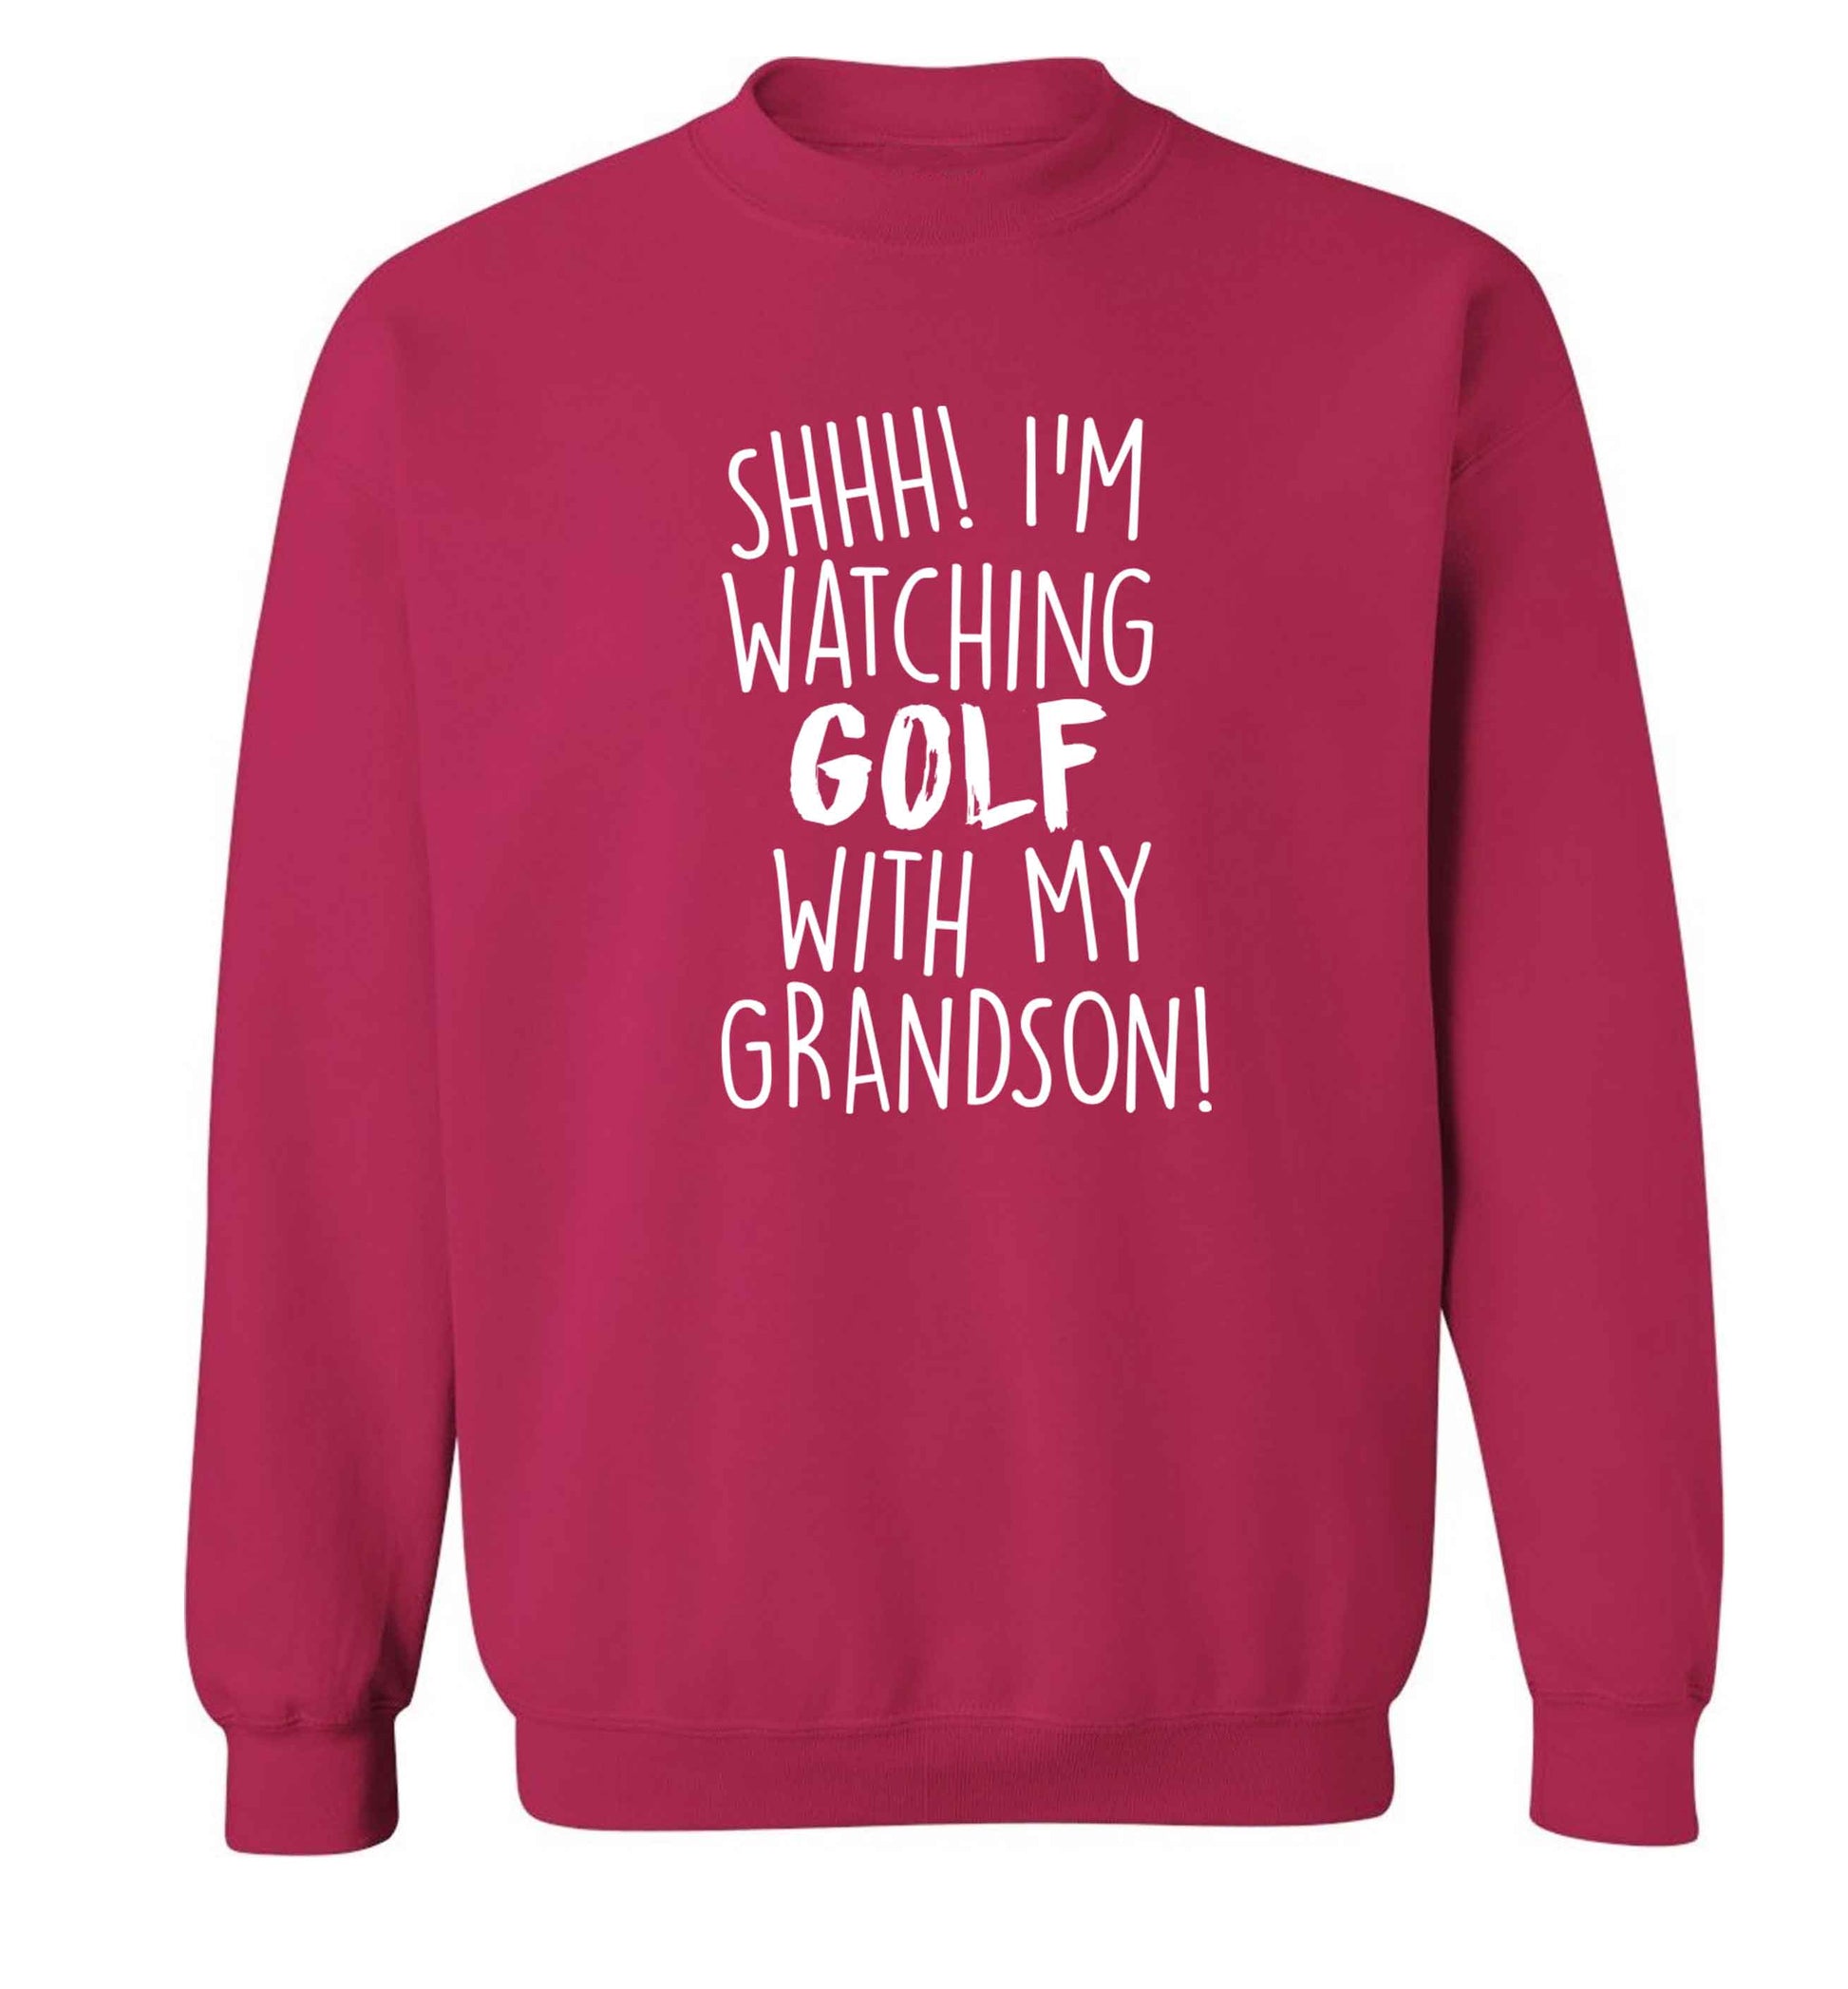 Shh I'm watching golf with my grandsonAdult's unisex pink Sweater 2XL